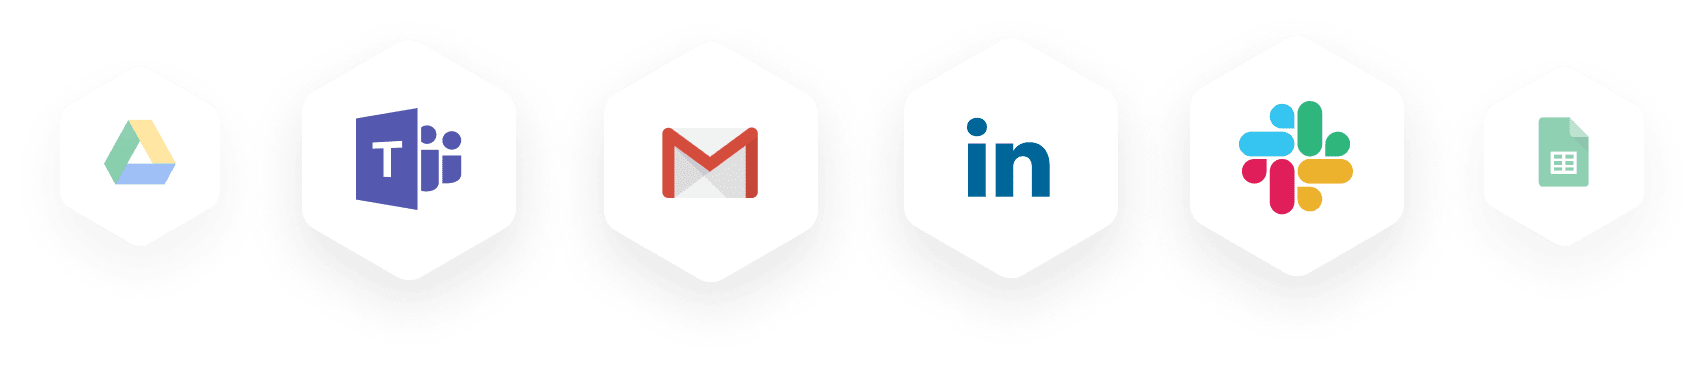 Logos for Google Drive, Microsoft Teams, Gmail, LinkedIn, Slack, and Google Docs